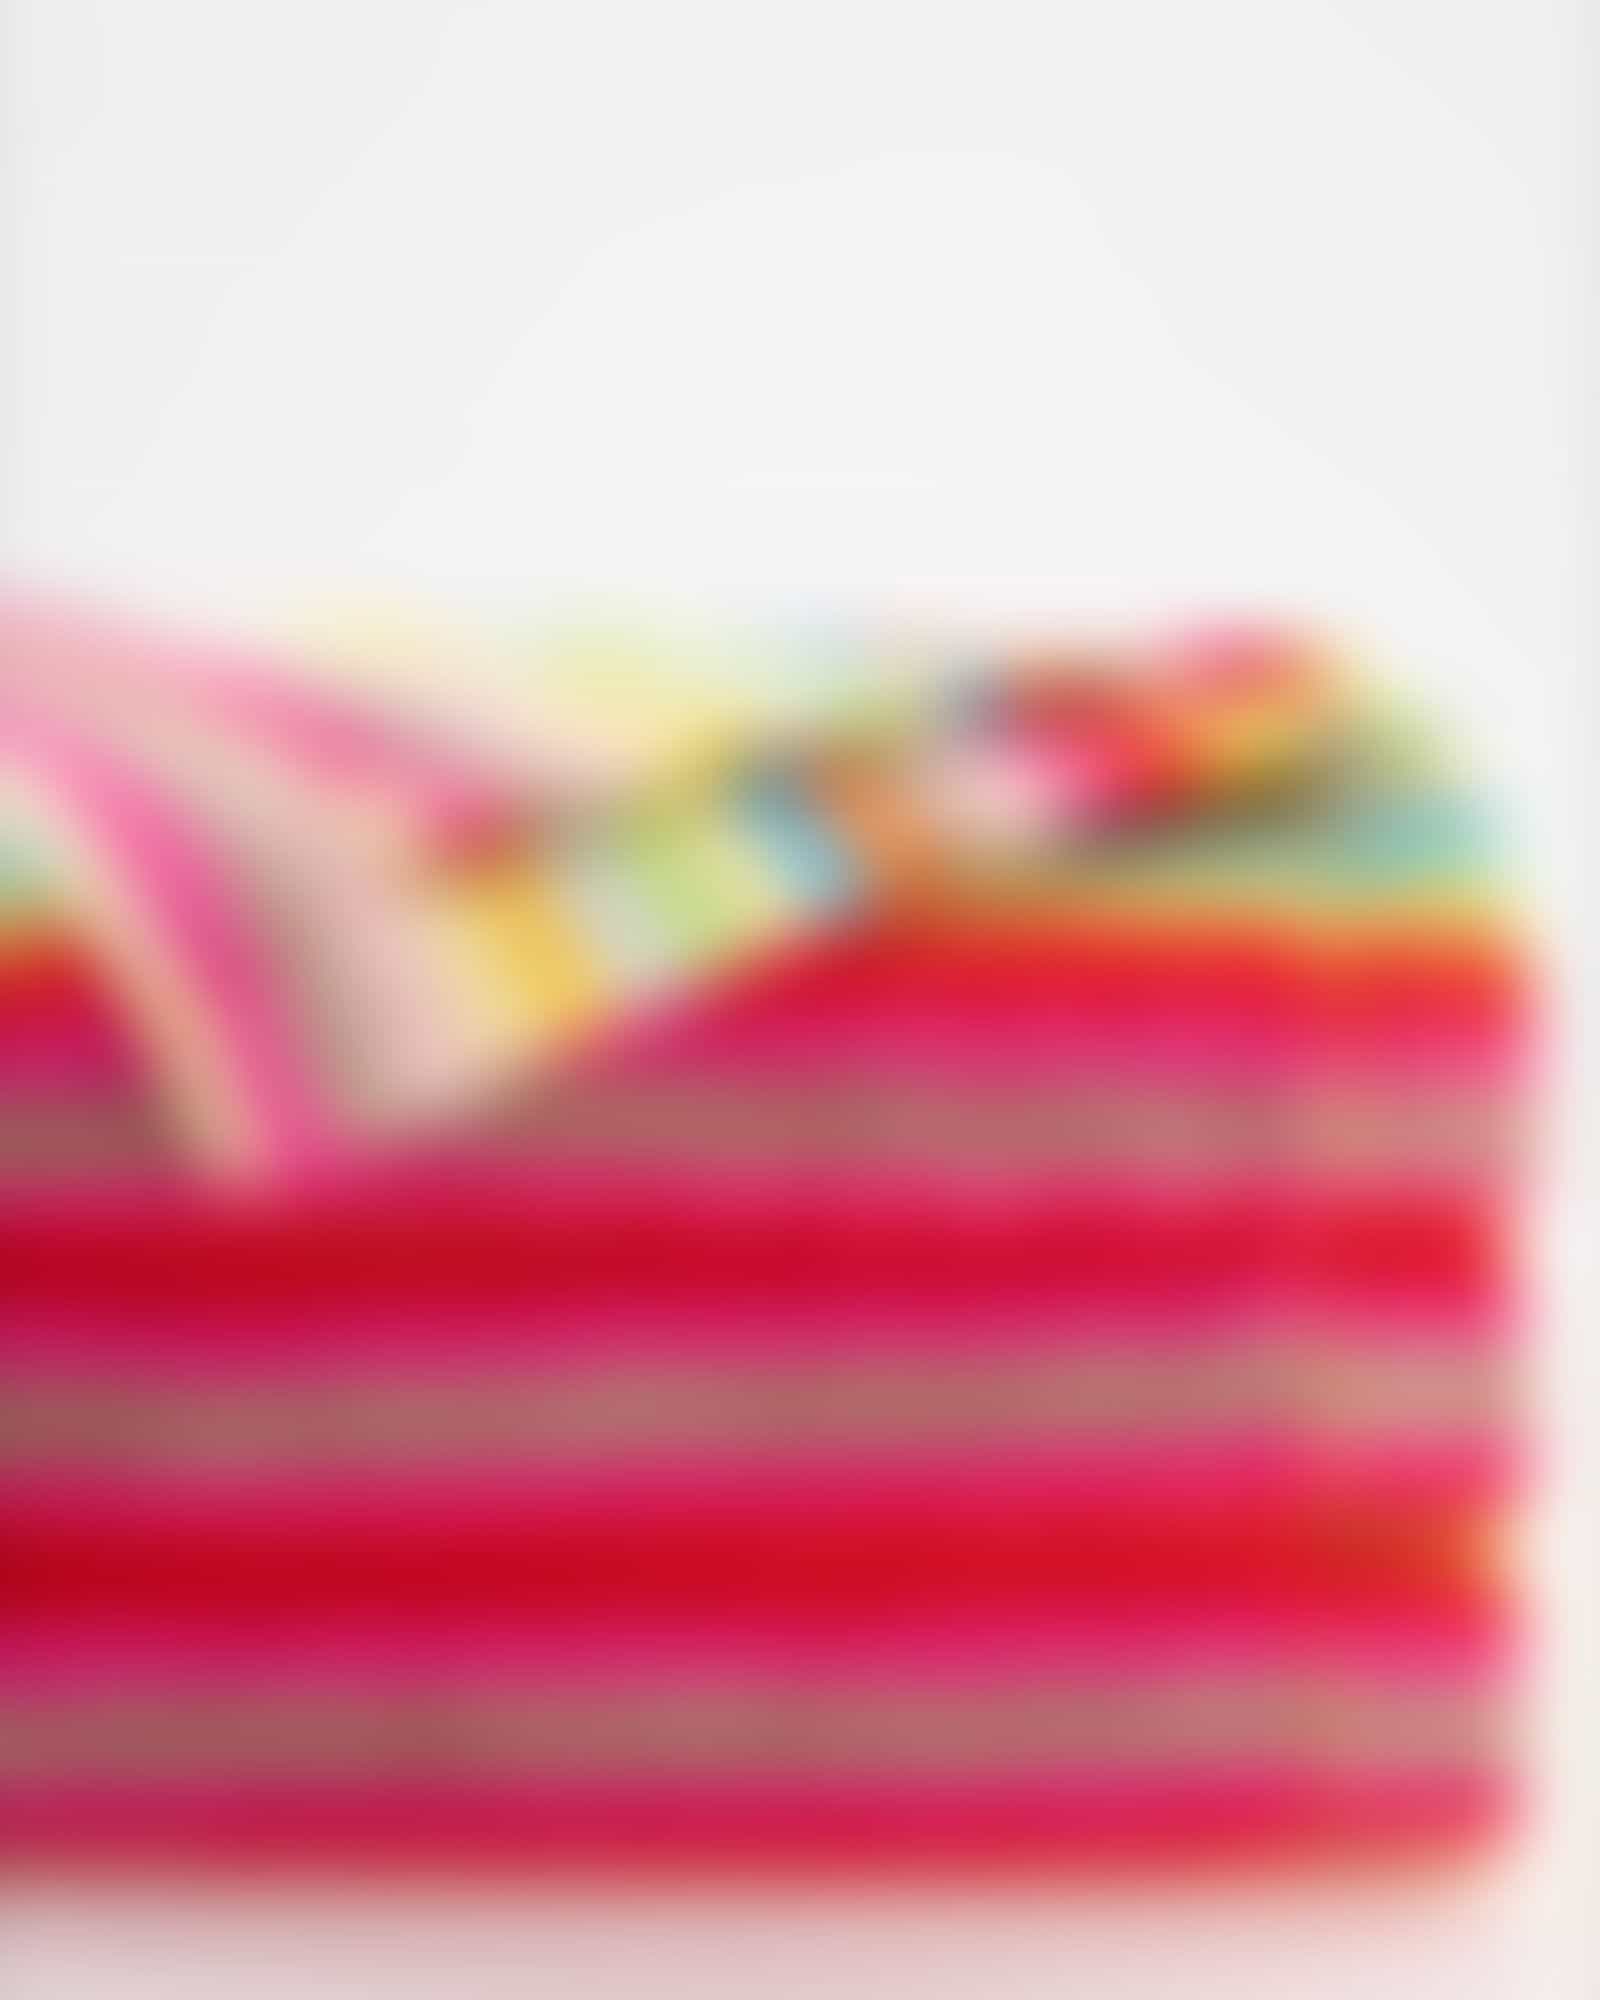 Cawö - Life Style Streifen 7008 - Farbe: 25 - multicolor - Handtuch 50x100 cm